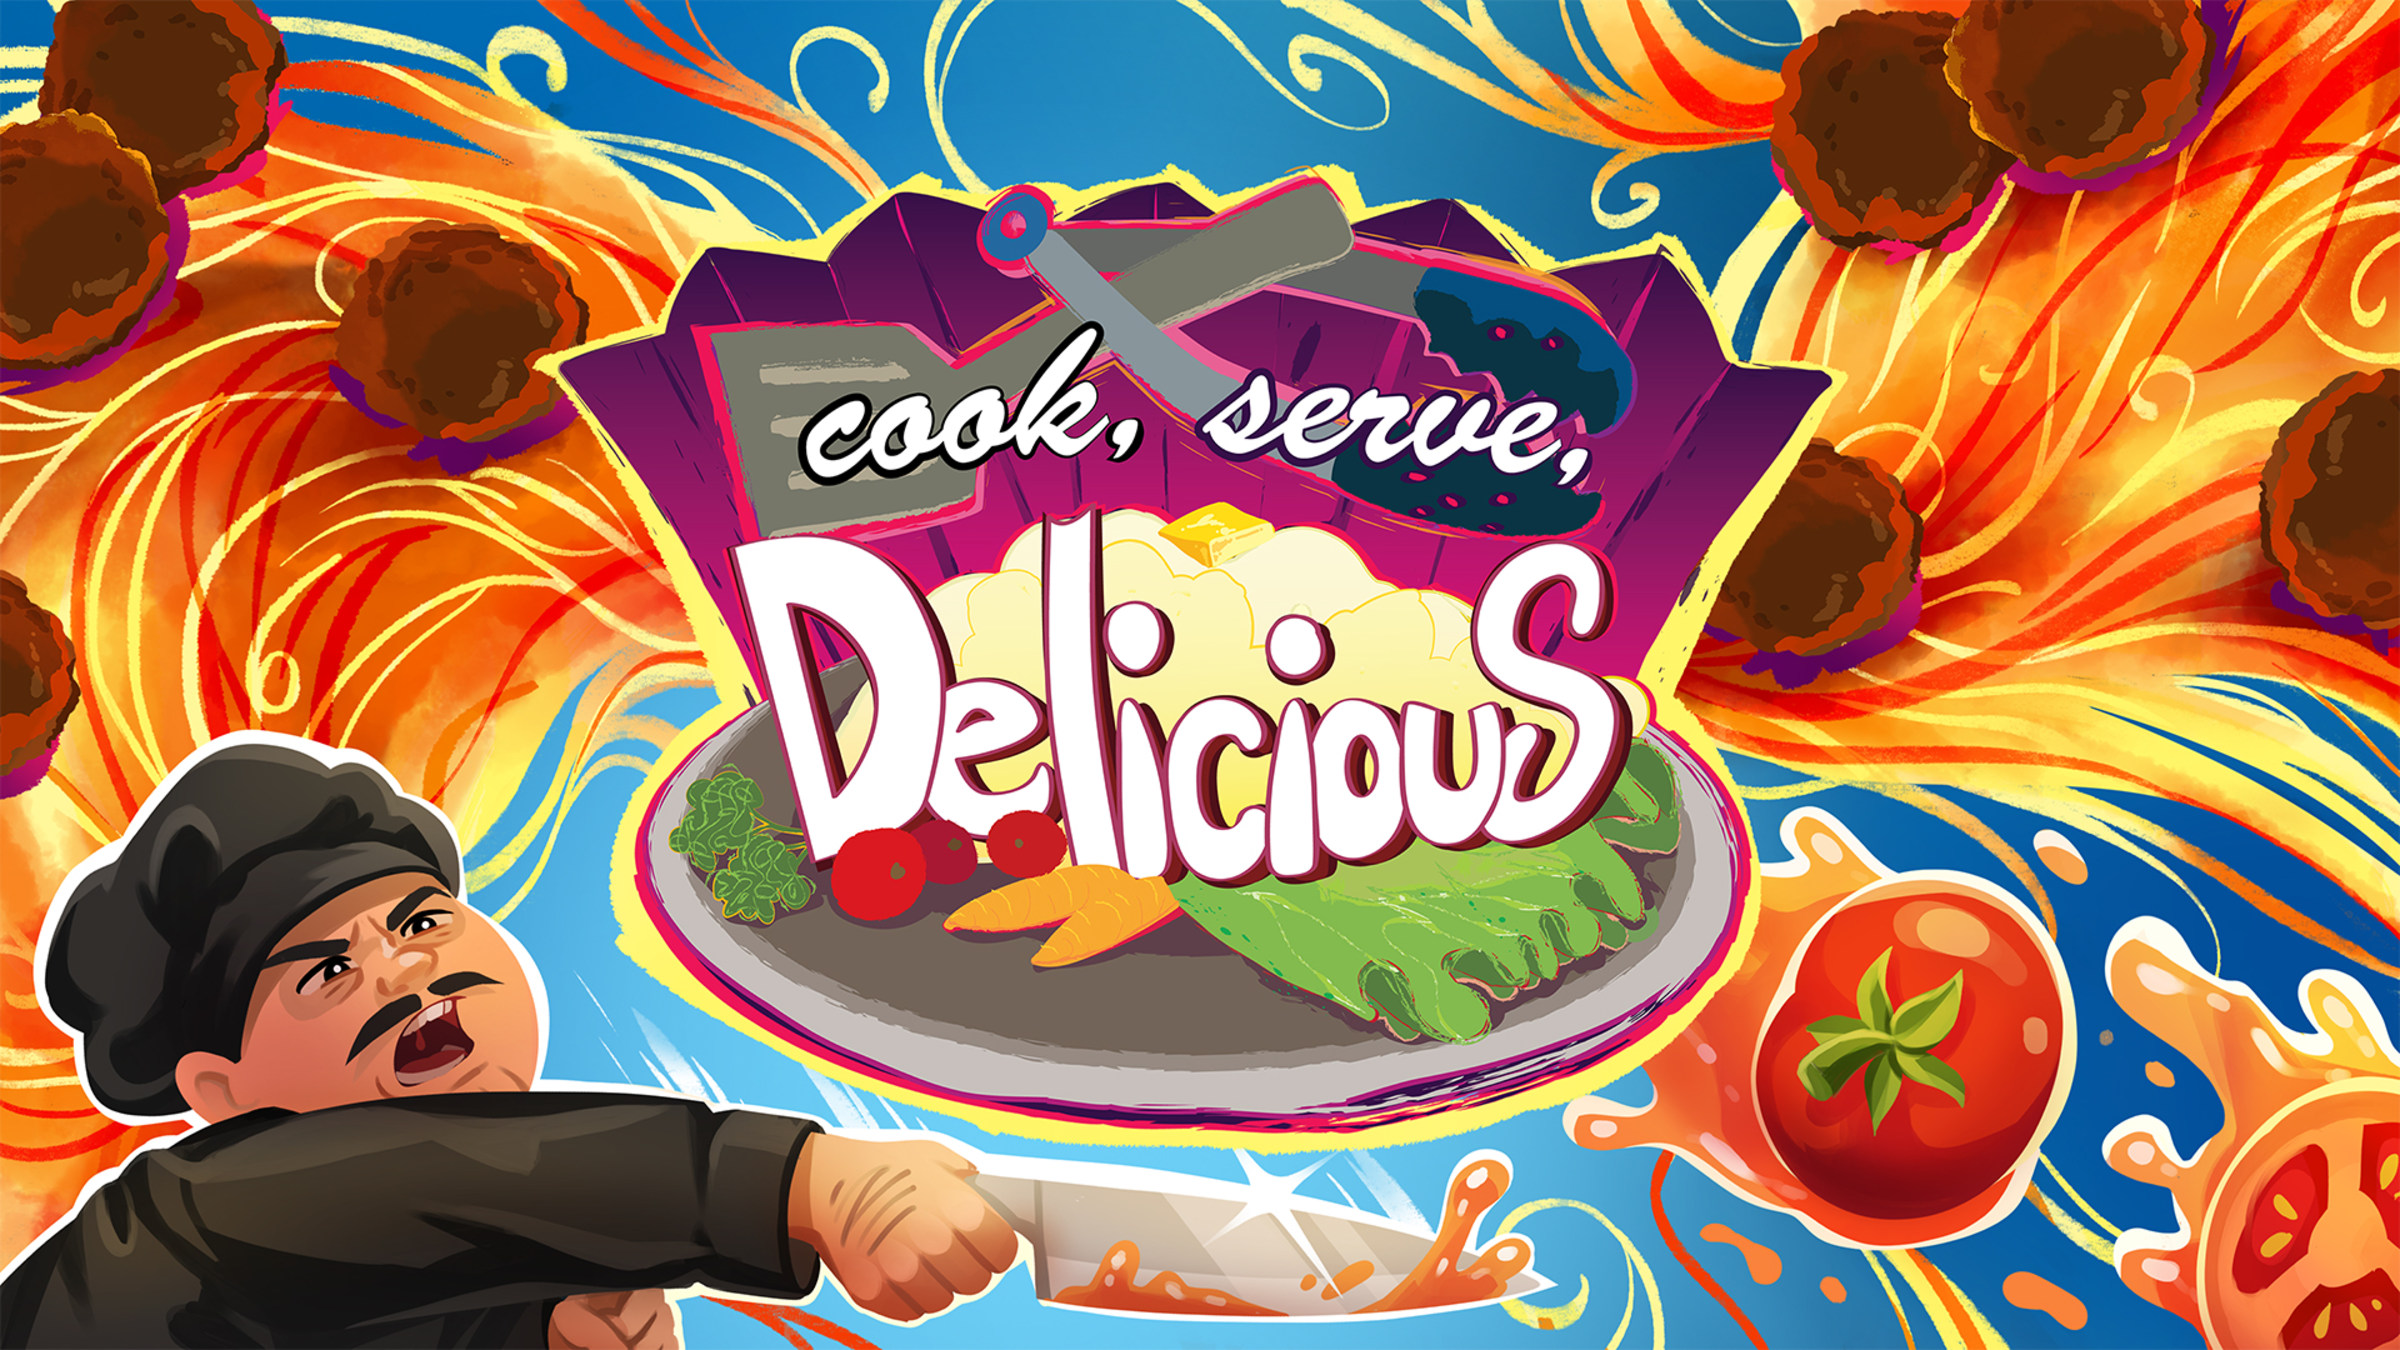 Delicious 12. Cook serve